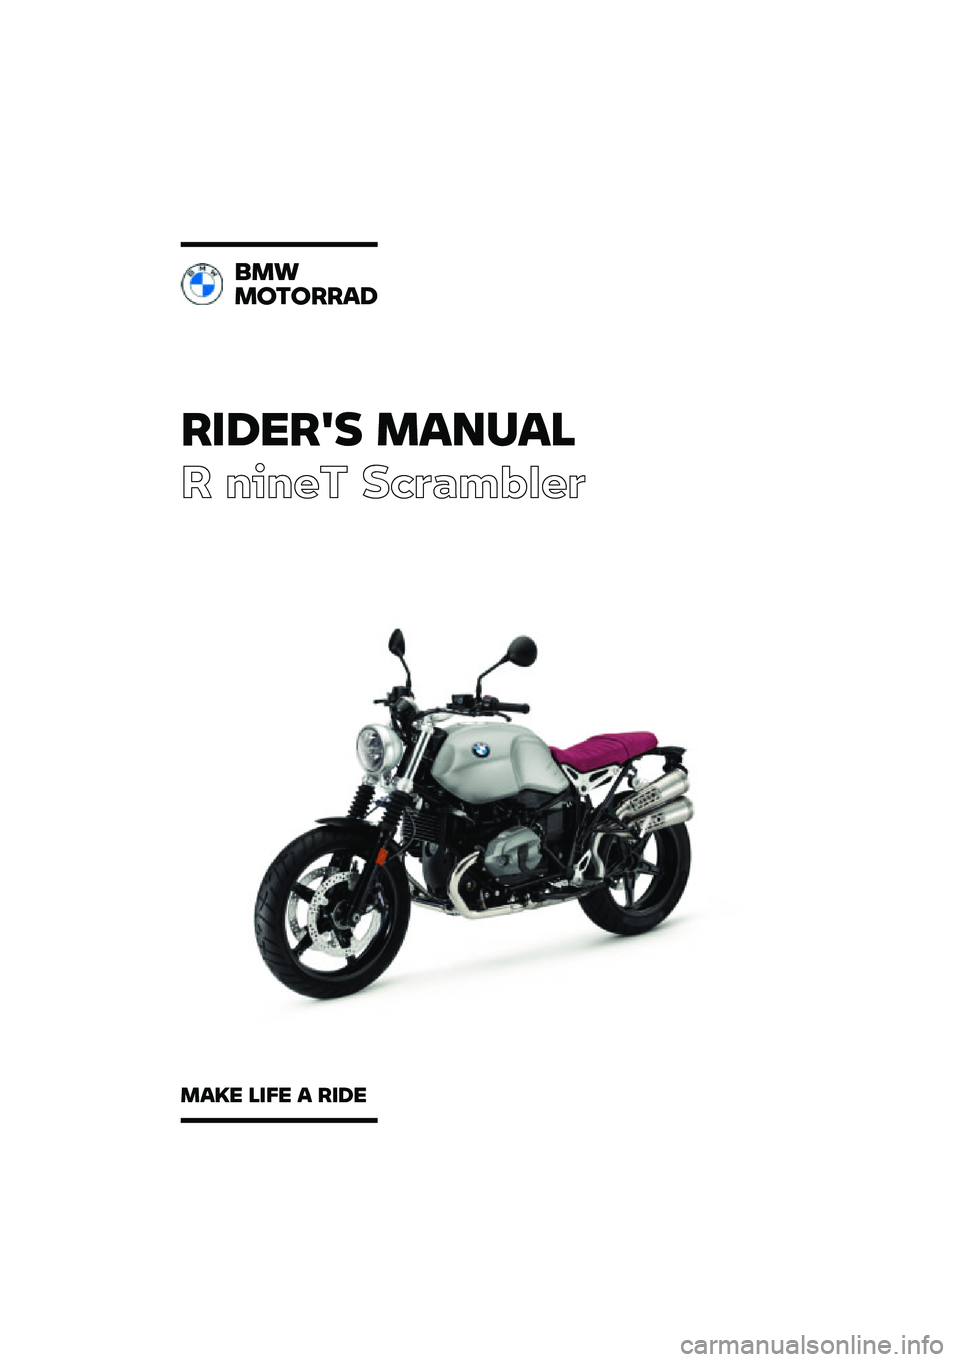 BMW MOTORRAD R NINE T SCRAMBLER 2021  Riders Manual (in English) ������� �\b�	�
��	�\f
� ����� ��\b�	�
��\f�
��	
�
�\b�
�\b������	�
�\b�	�� �\f��� �	 ���� 